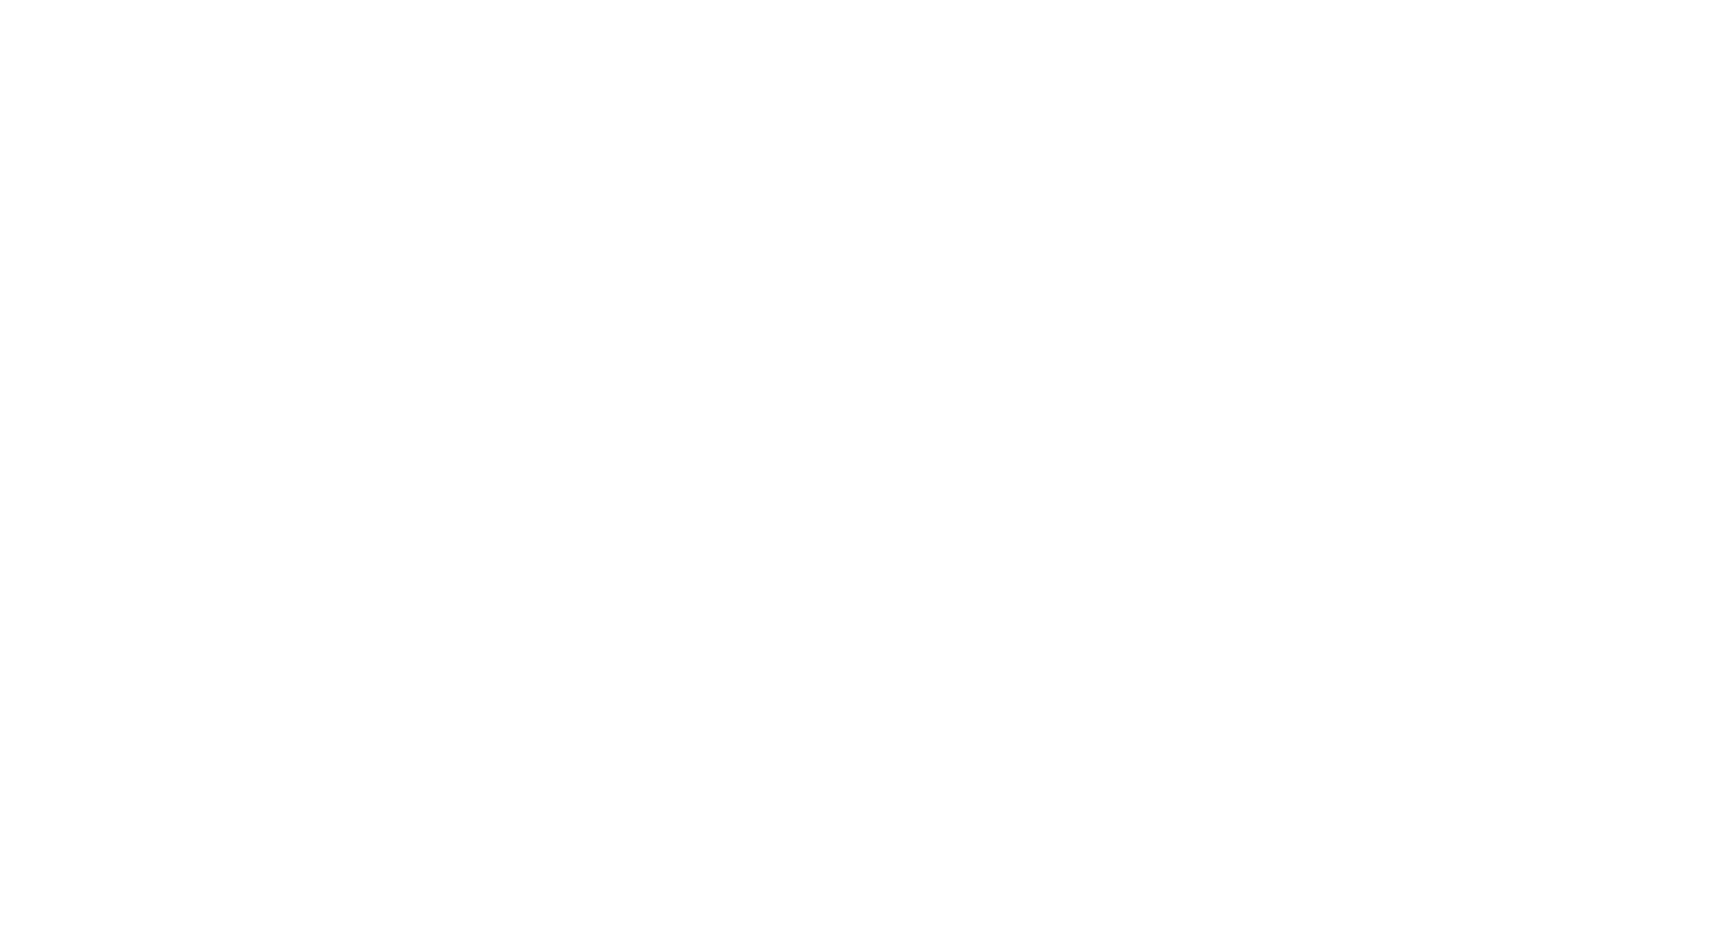 Founders & Company